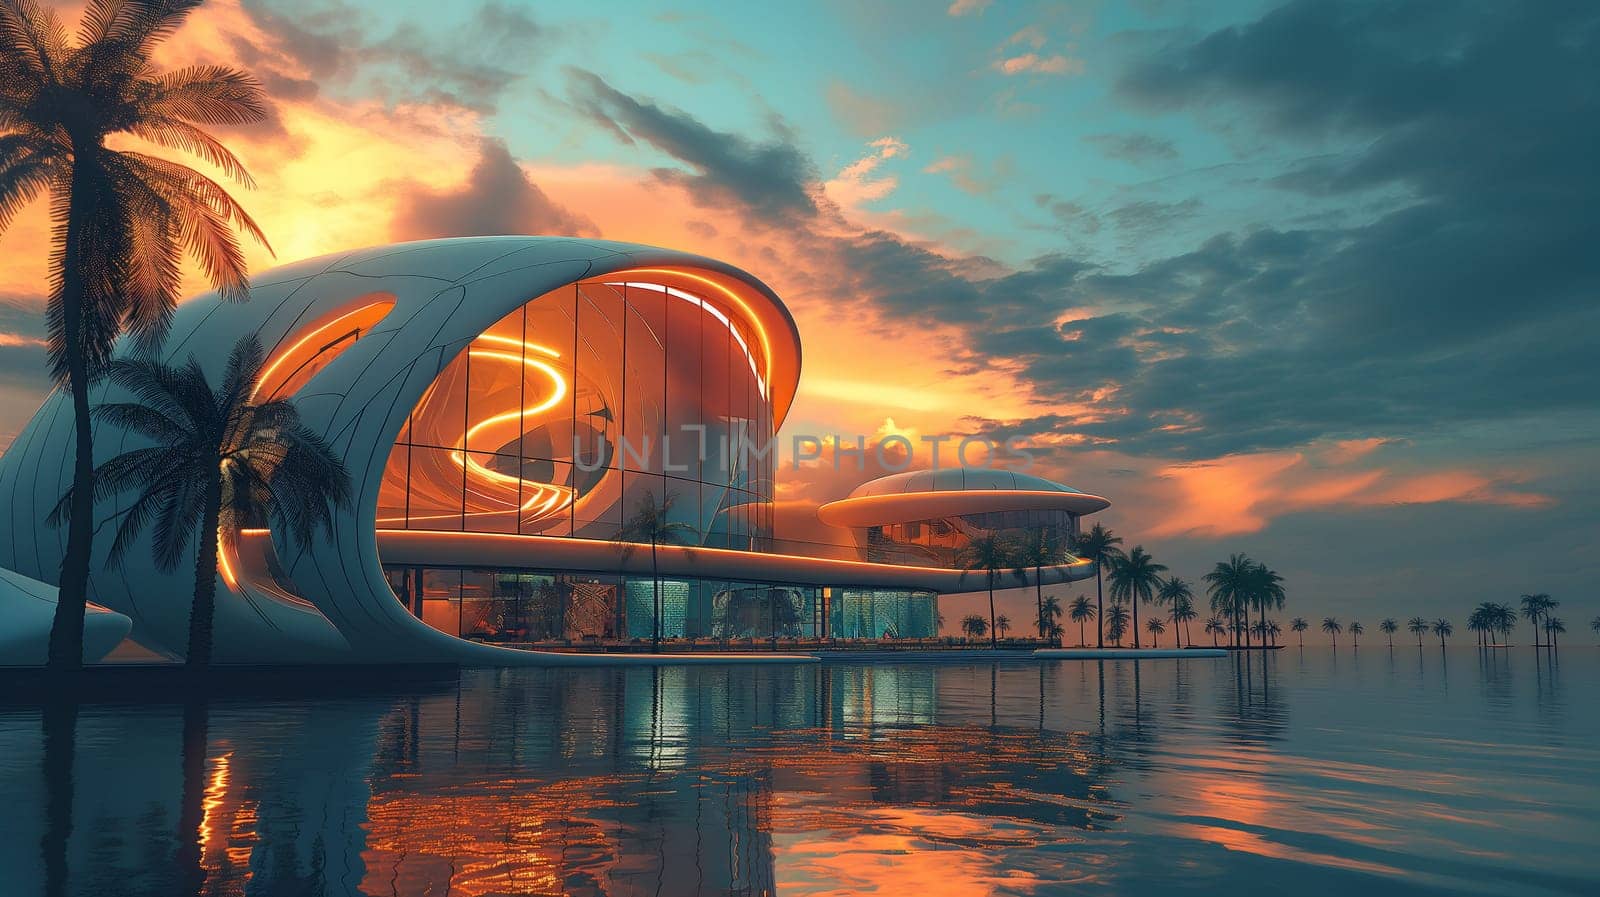 Sunset Reflections on Futuristic Waterfront Architecture by chrisroll